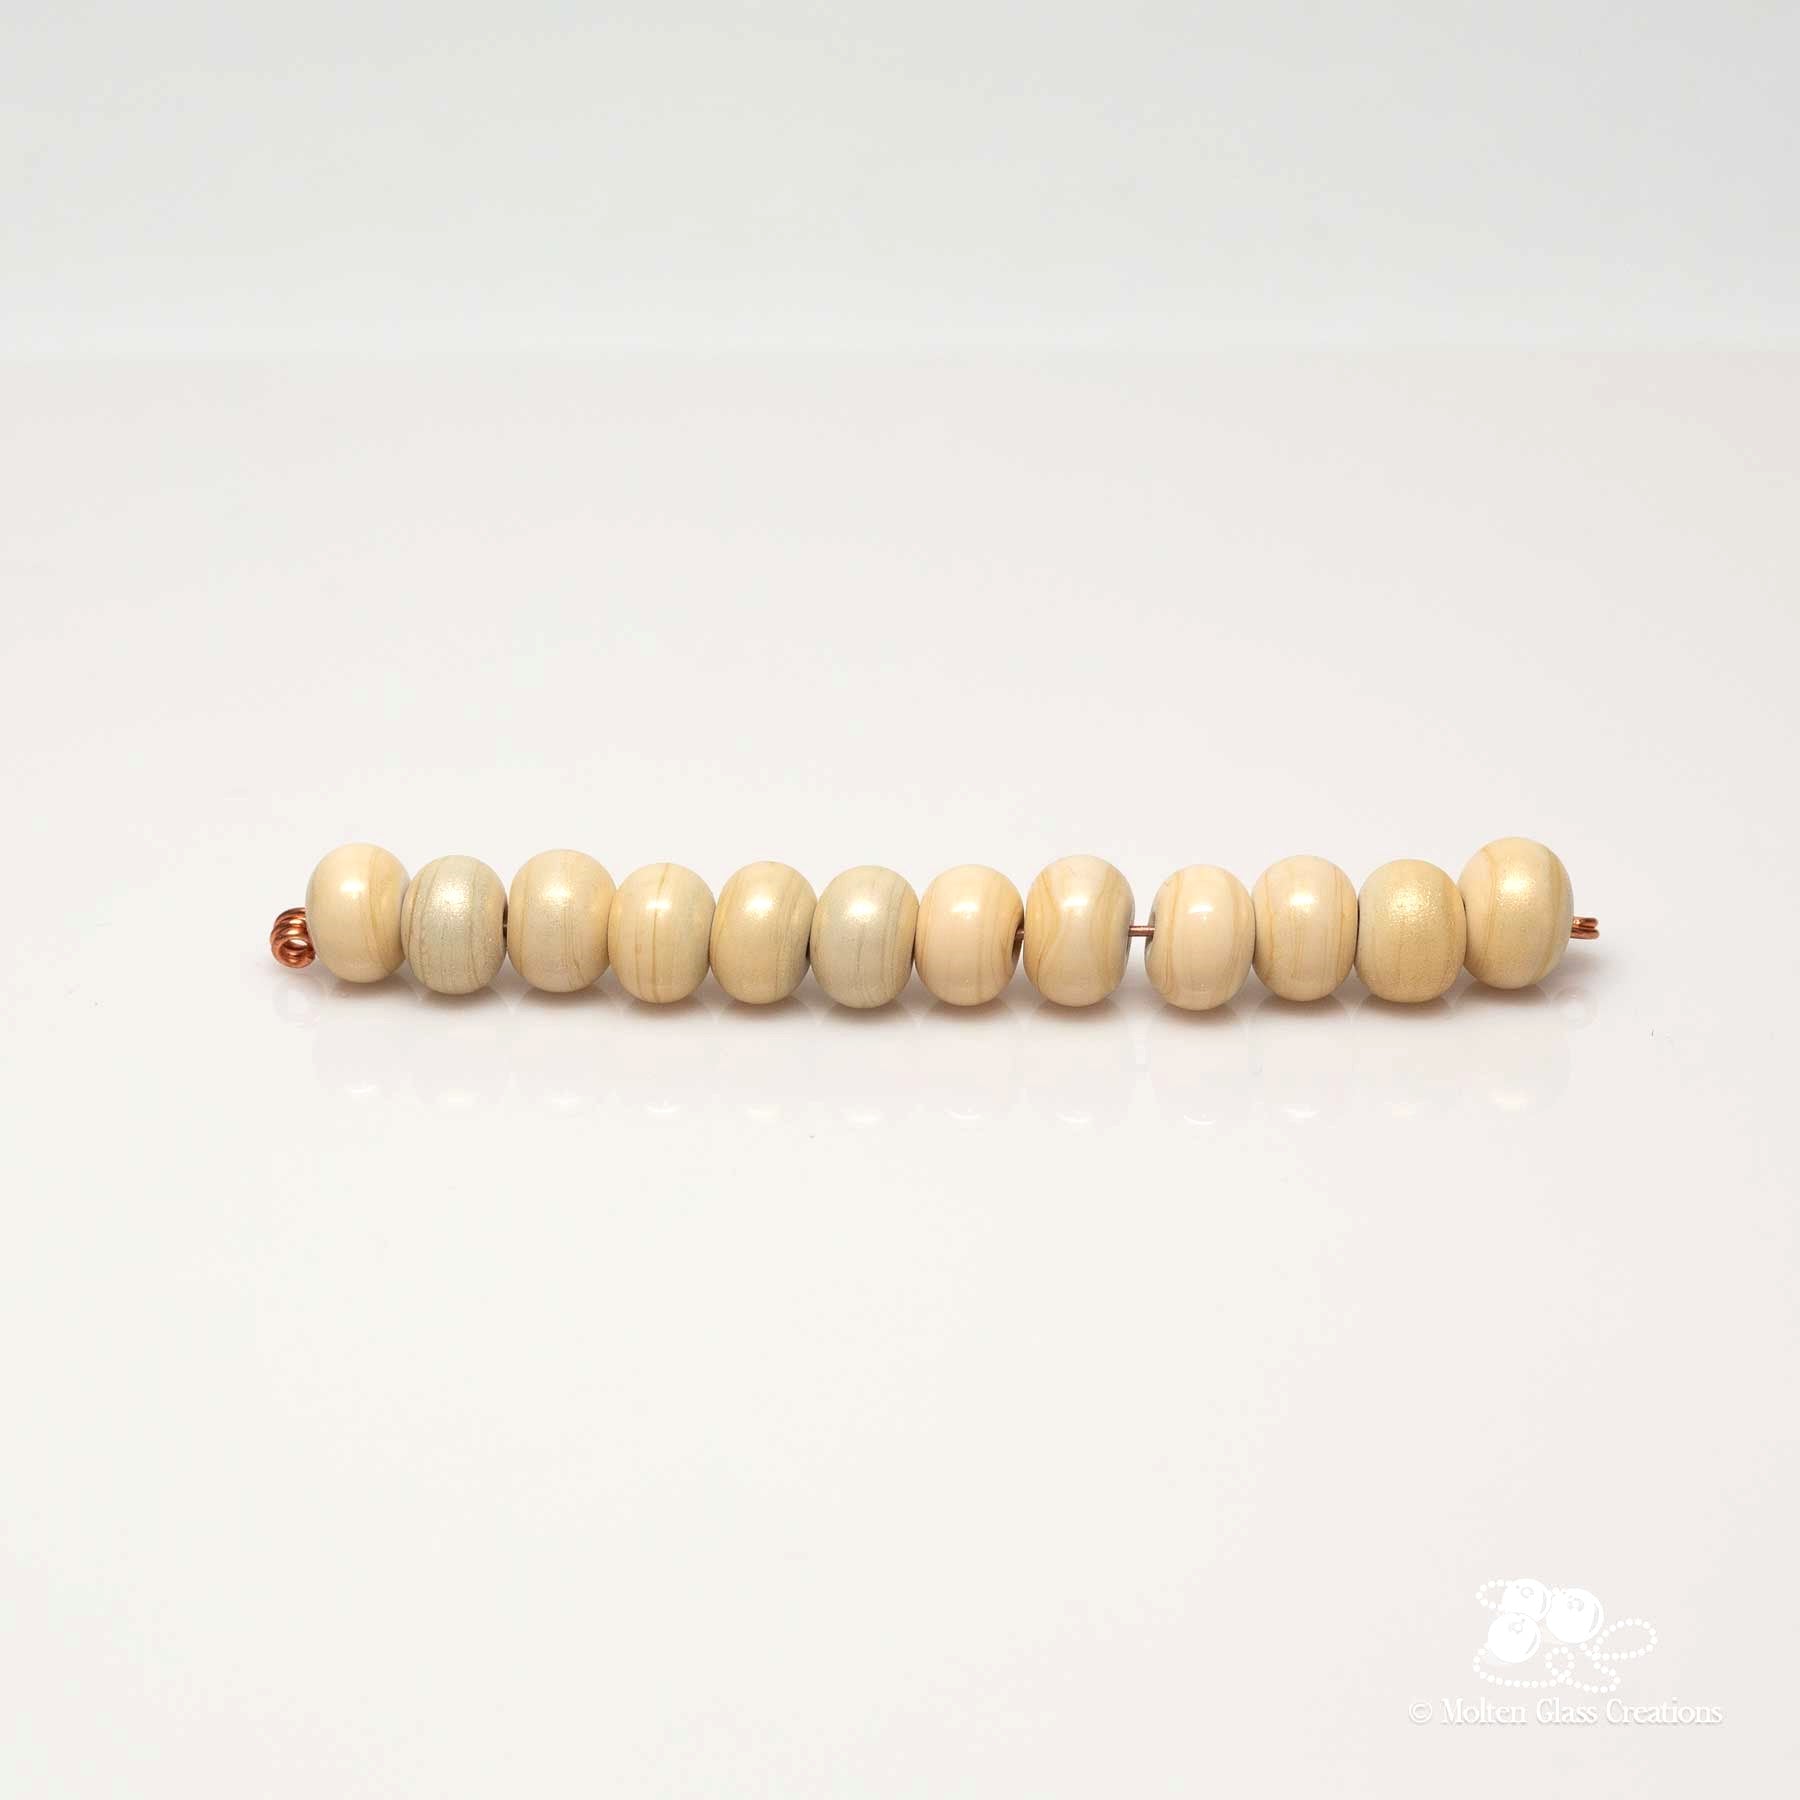 ivory coloured glass beads